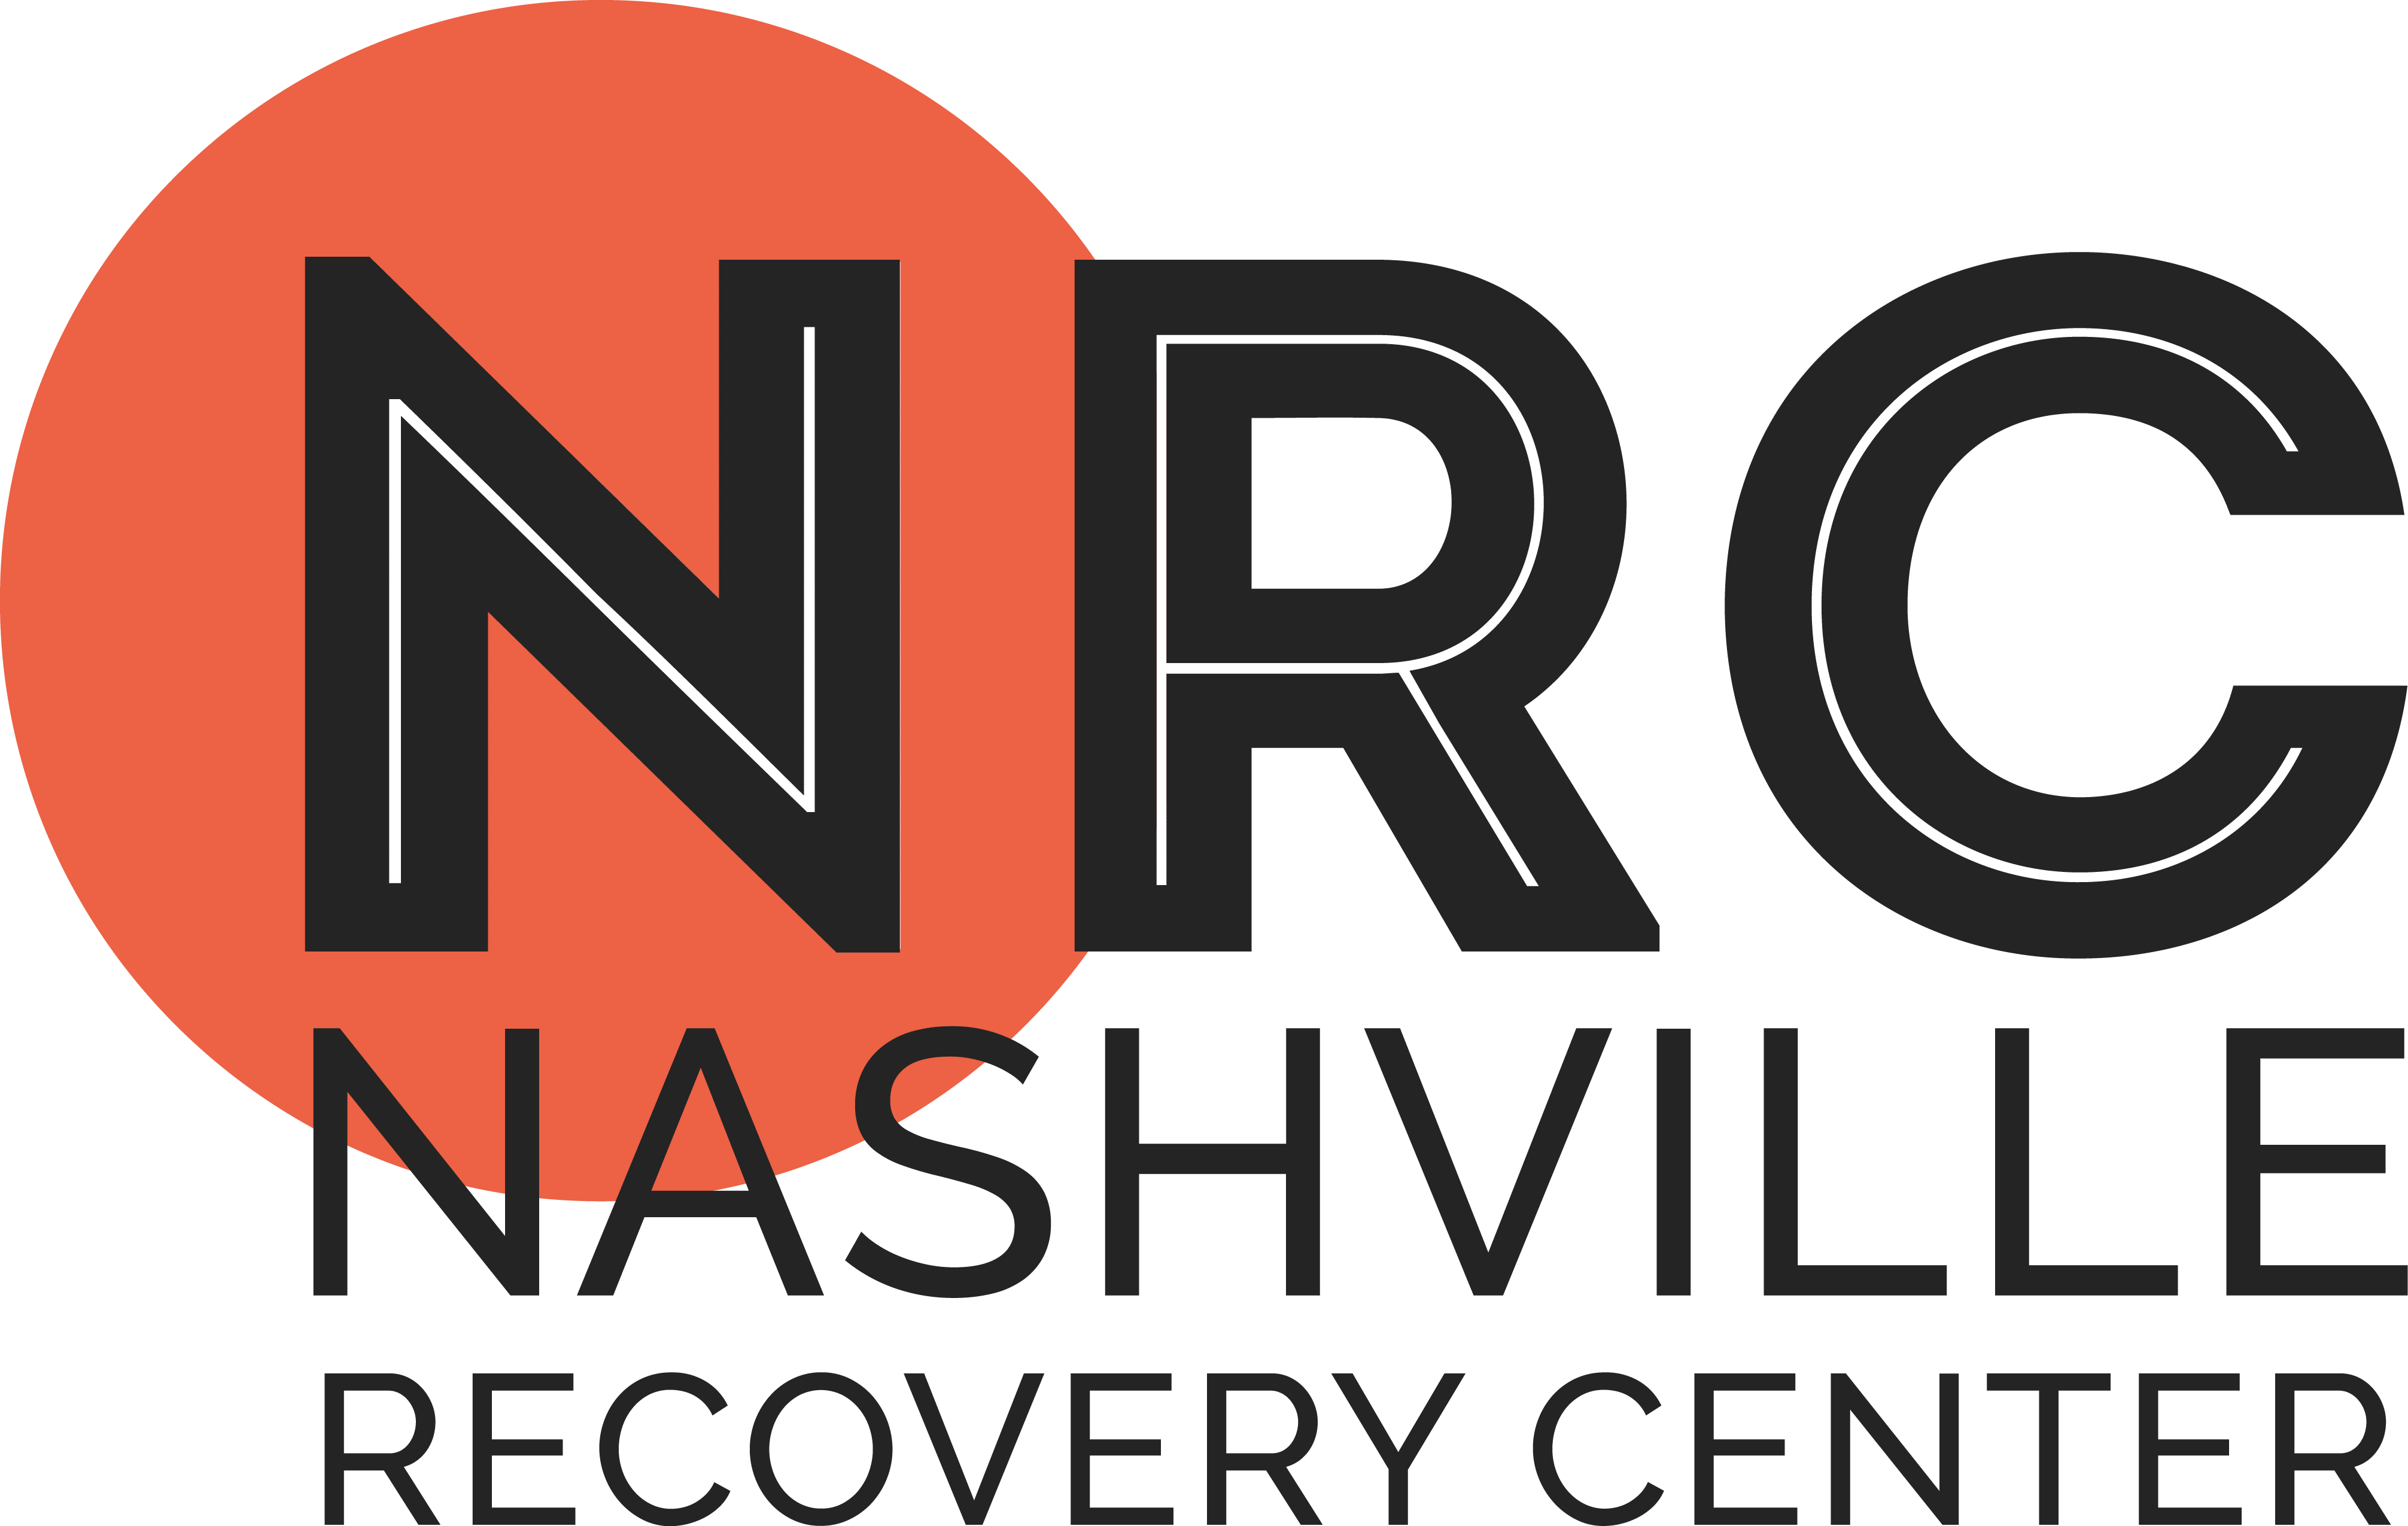 Nashville Recovery Center logo